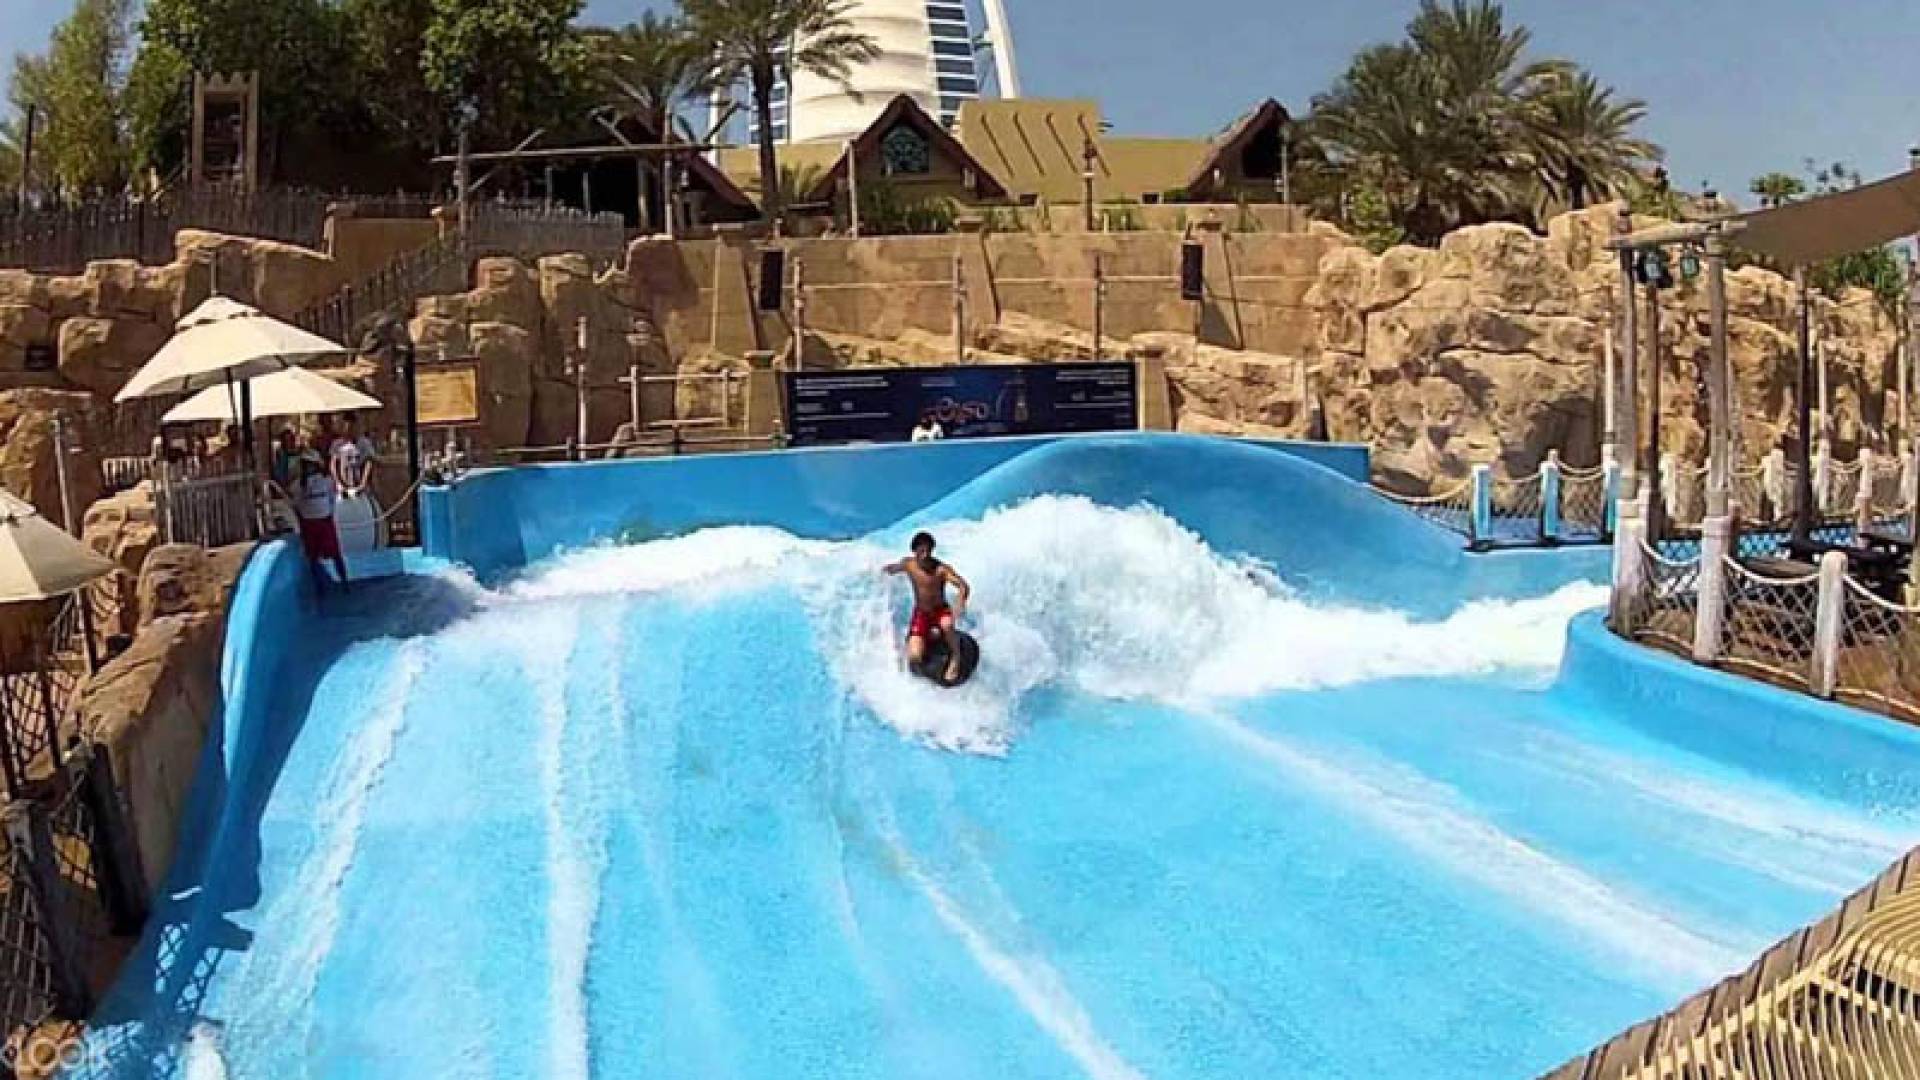 WATER PARKS, Wild Wadi Waterpark, Legoland Water Park